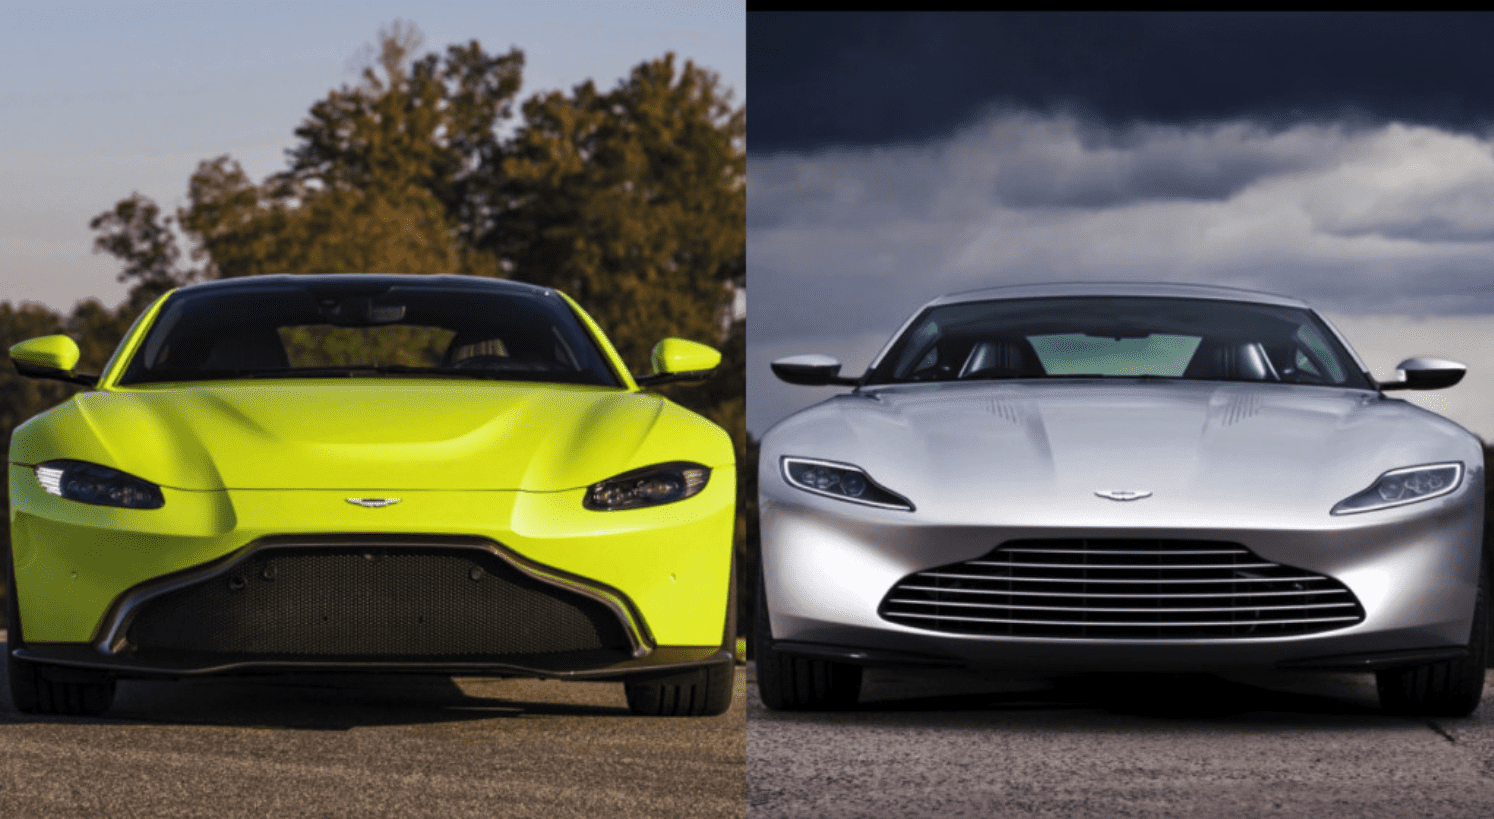 Was James Bond's Aston Martin DB10 based on the 2019 Vantage?